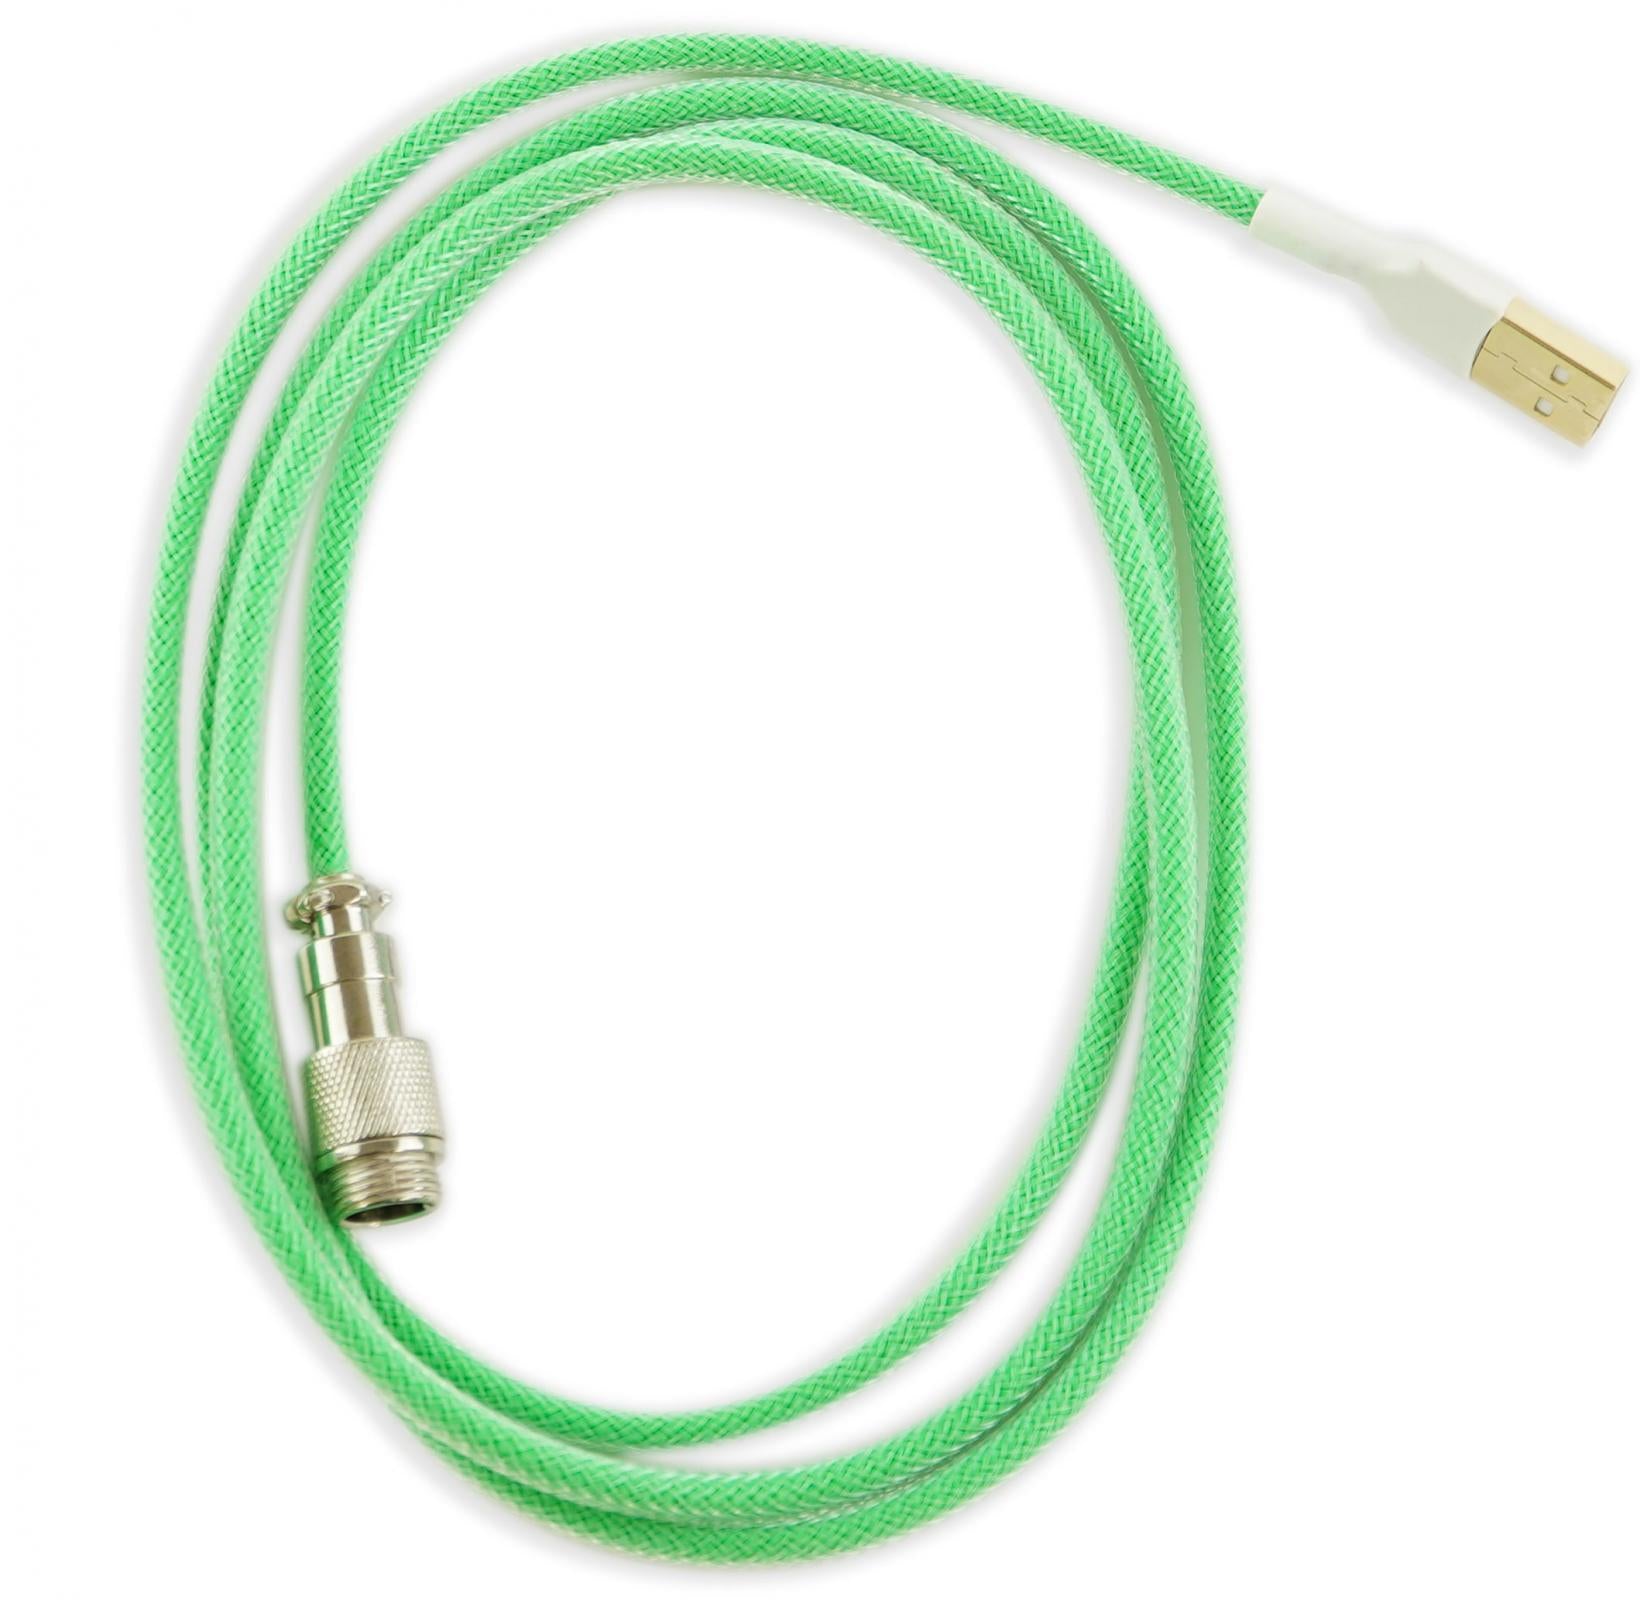 Kraken Green Sleeved Aviator Universal USB Keyboard Cable MKIL0K33X1 |0|